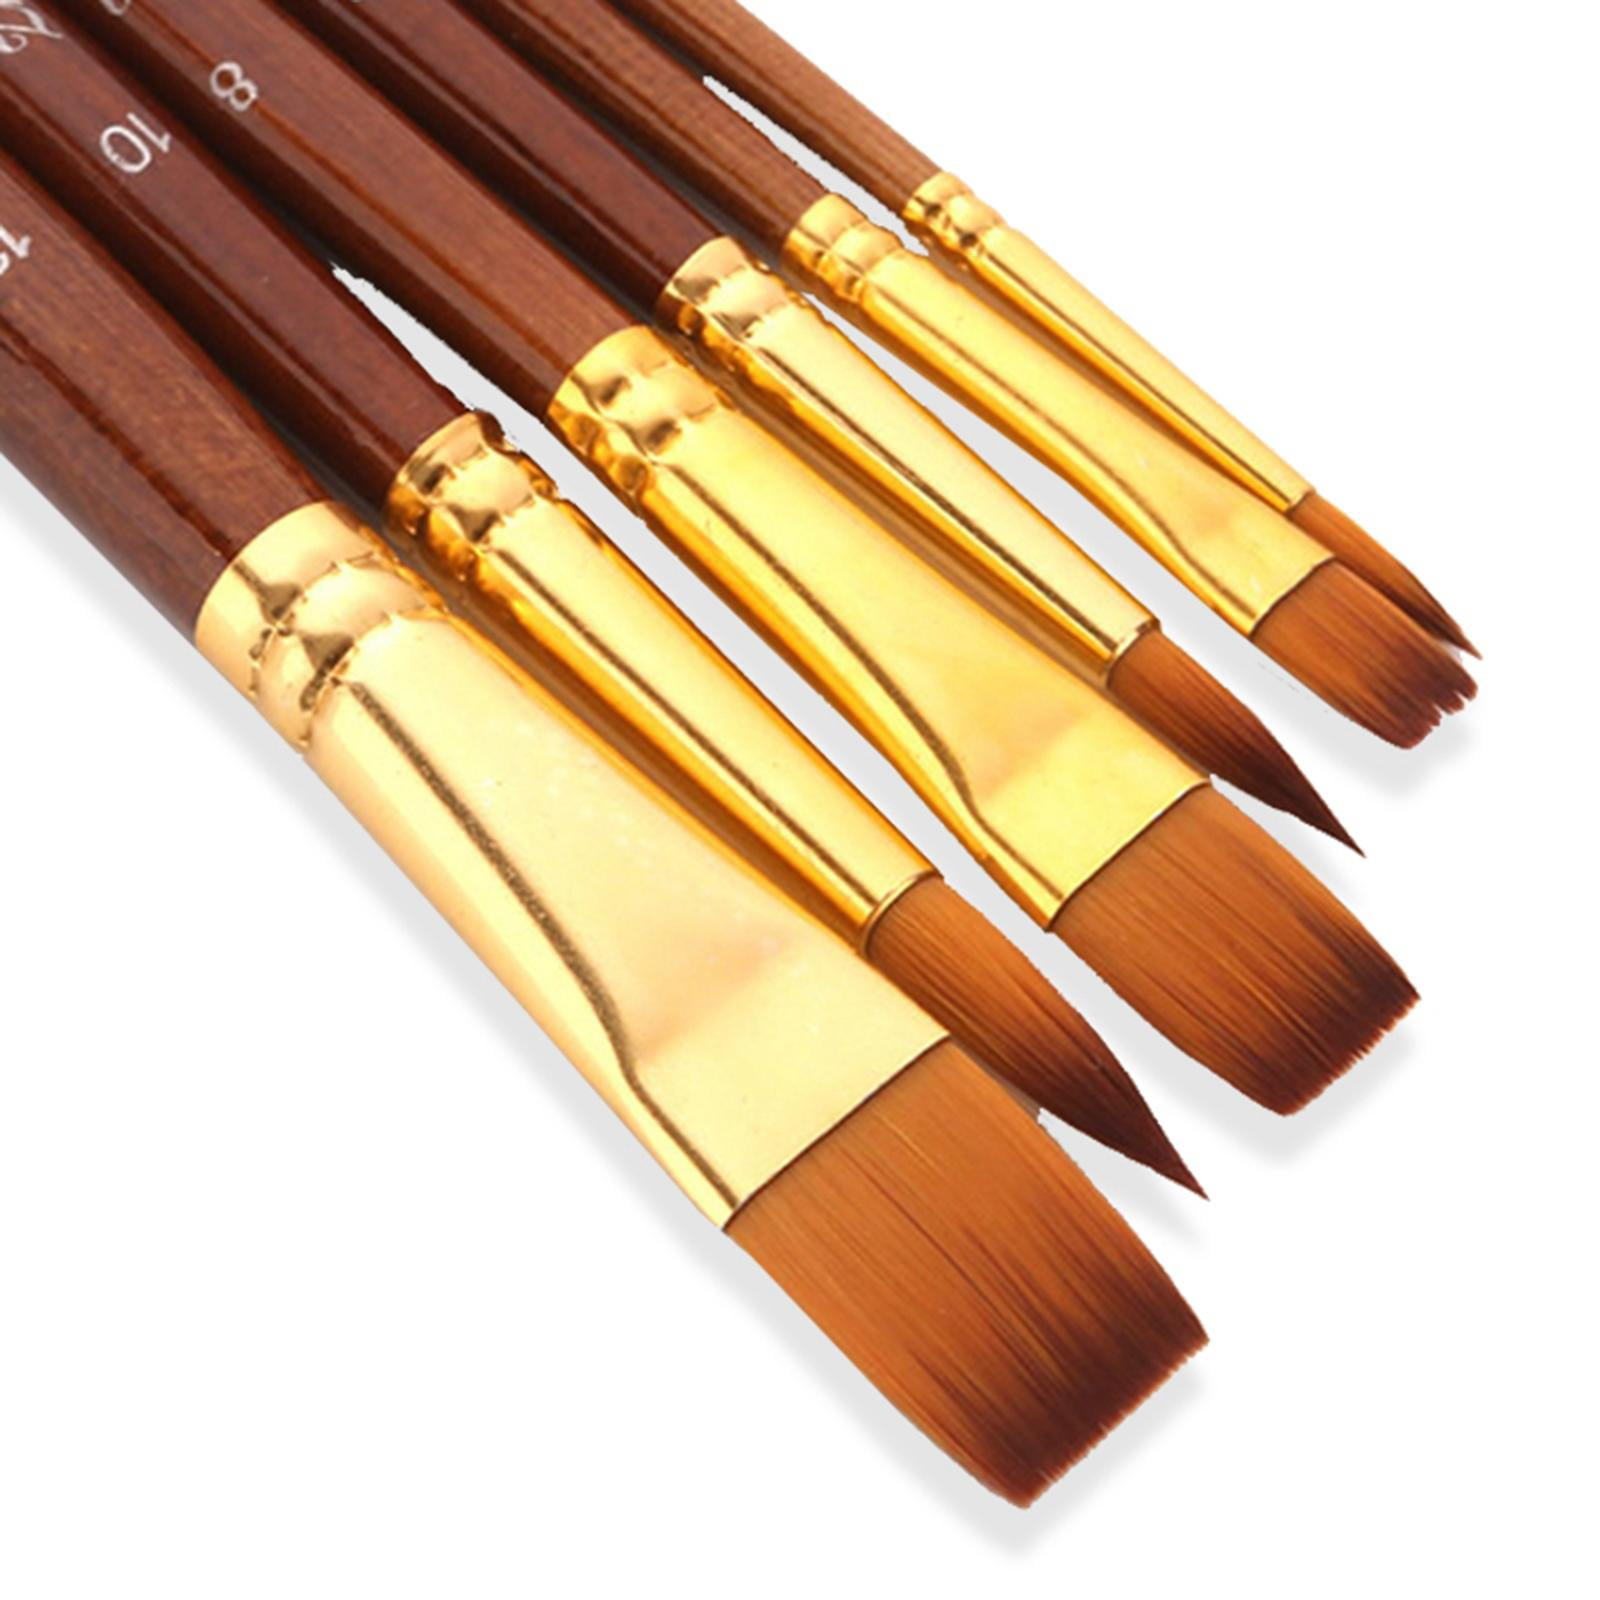 Paint Brushes Set Professional Nylon Hair Wood White Handle Painting Brush  For Watercolor Pigment Brush 10pcs